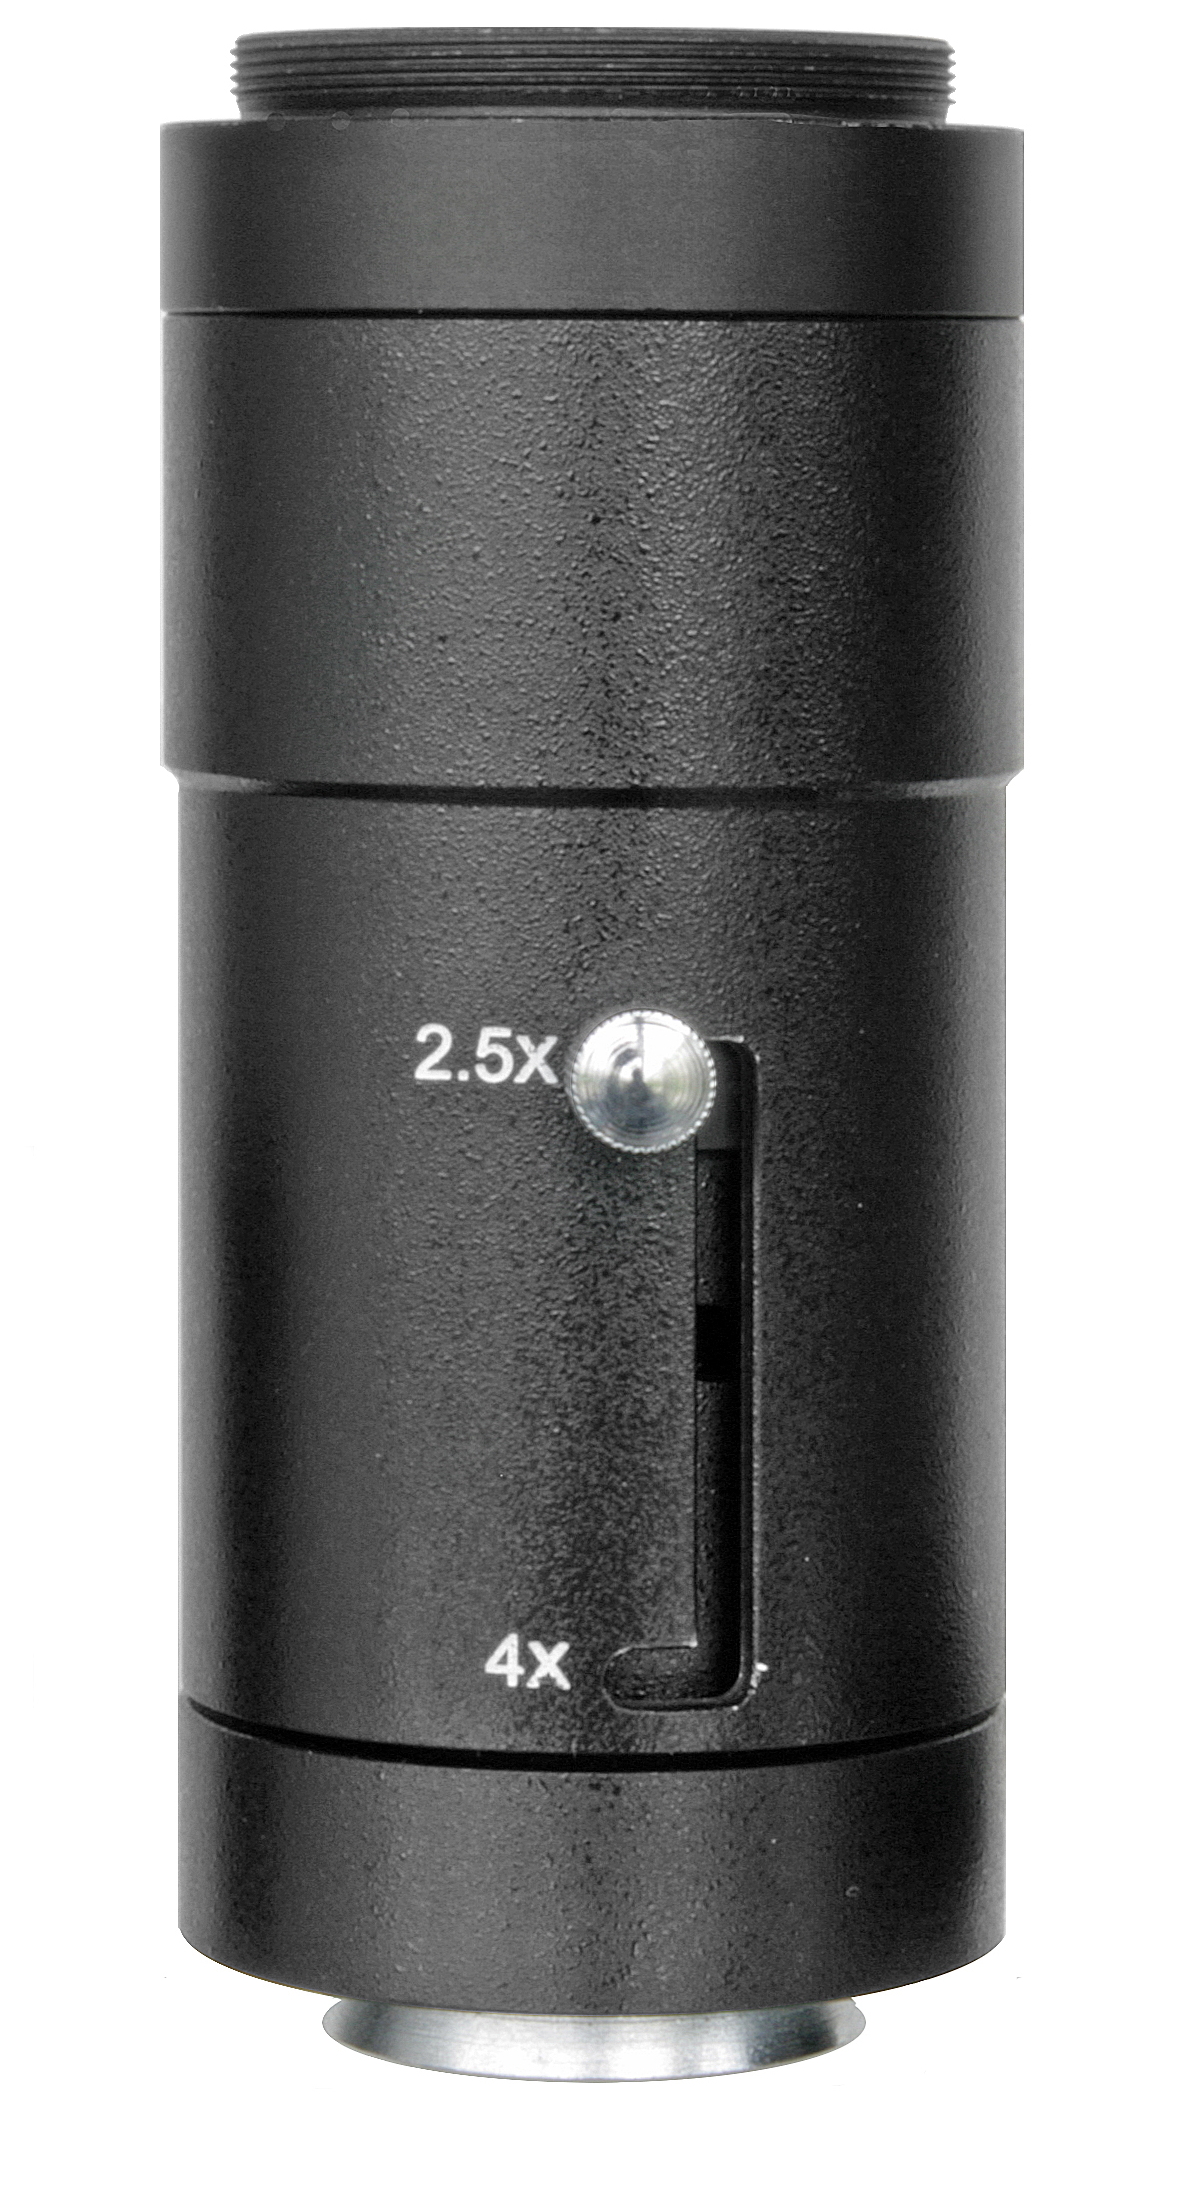 BRESSER SLR-camera-adapter 2.5x and 4x